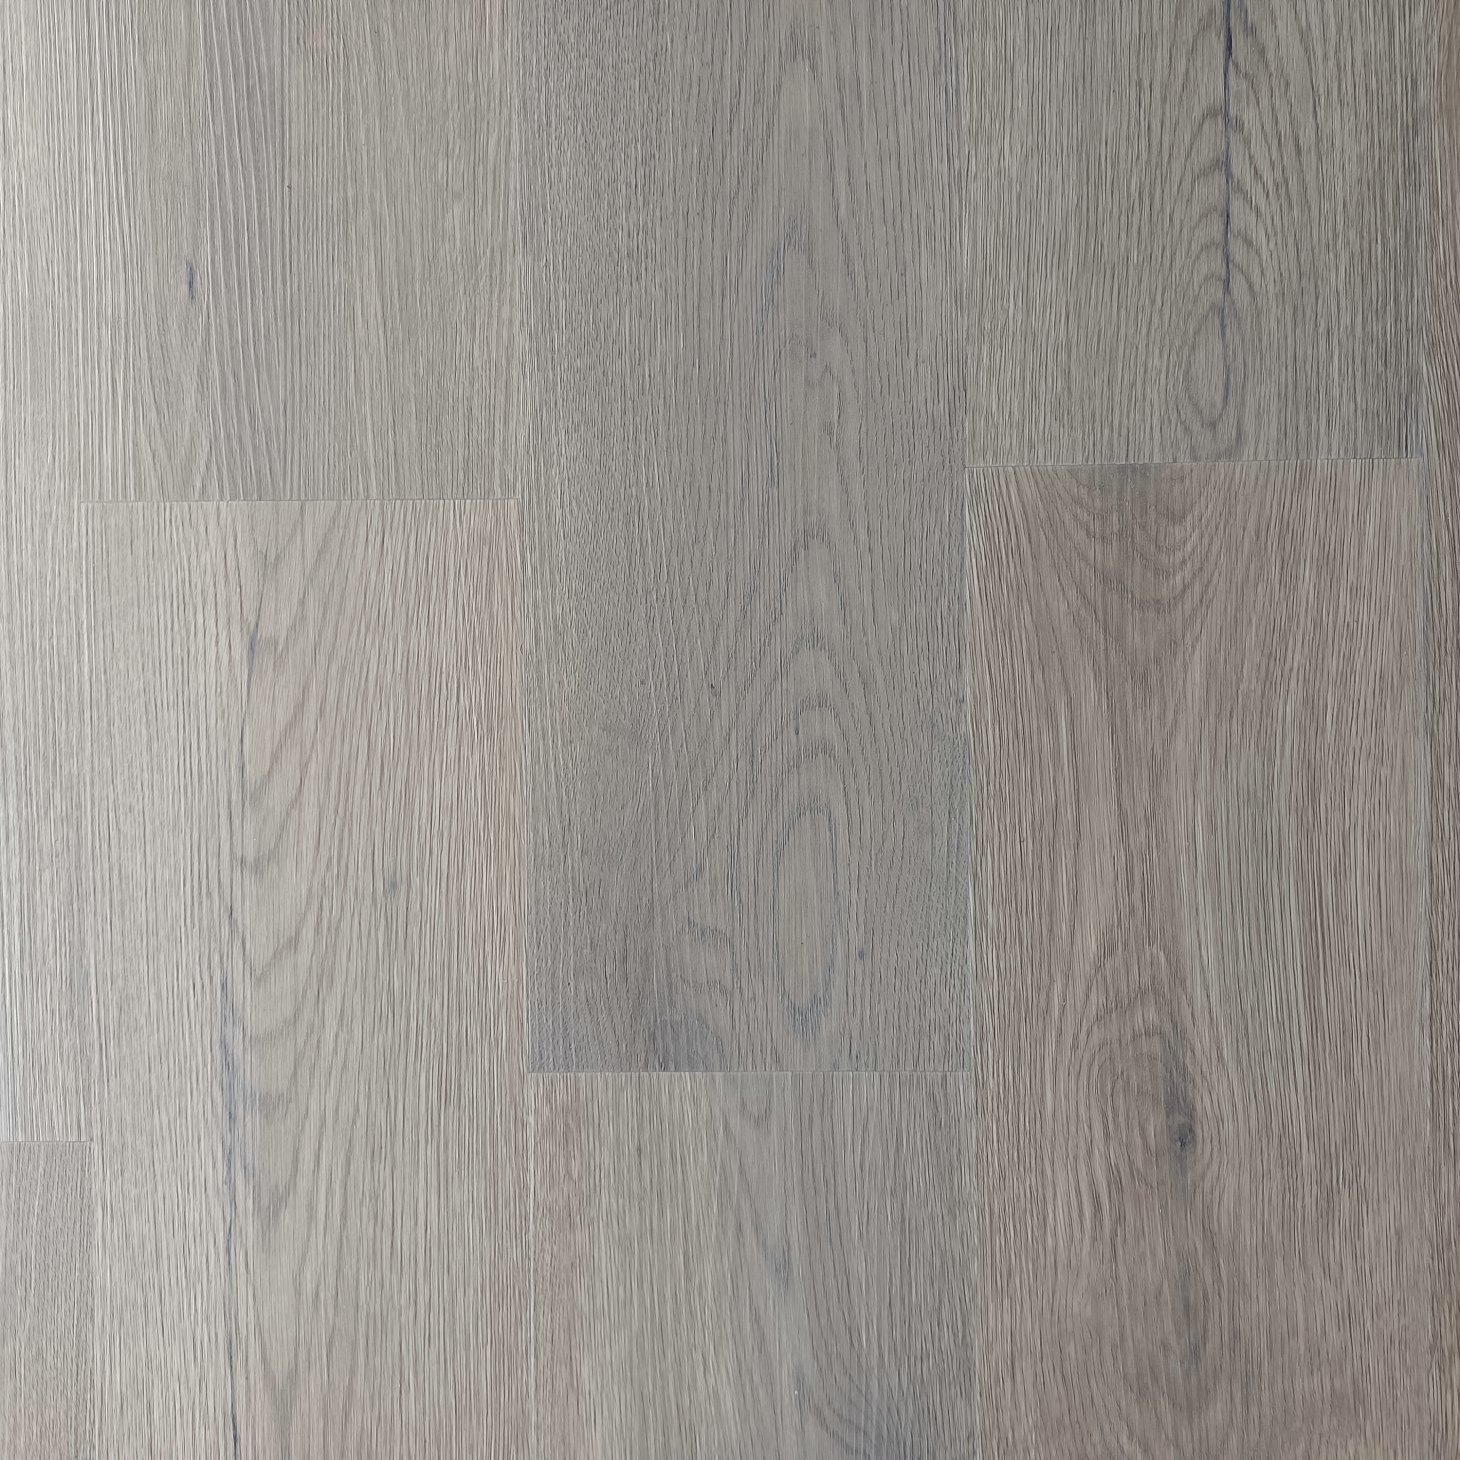 Discount wholesale Vinyl Plank Stair Treads -
 Stable structure ABA luxury rigid spc flooring from Kangton – Kangton